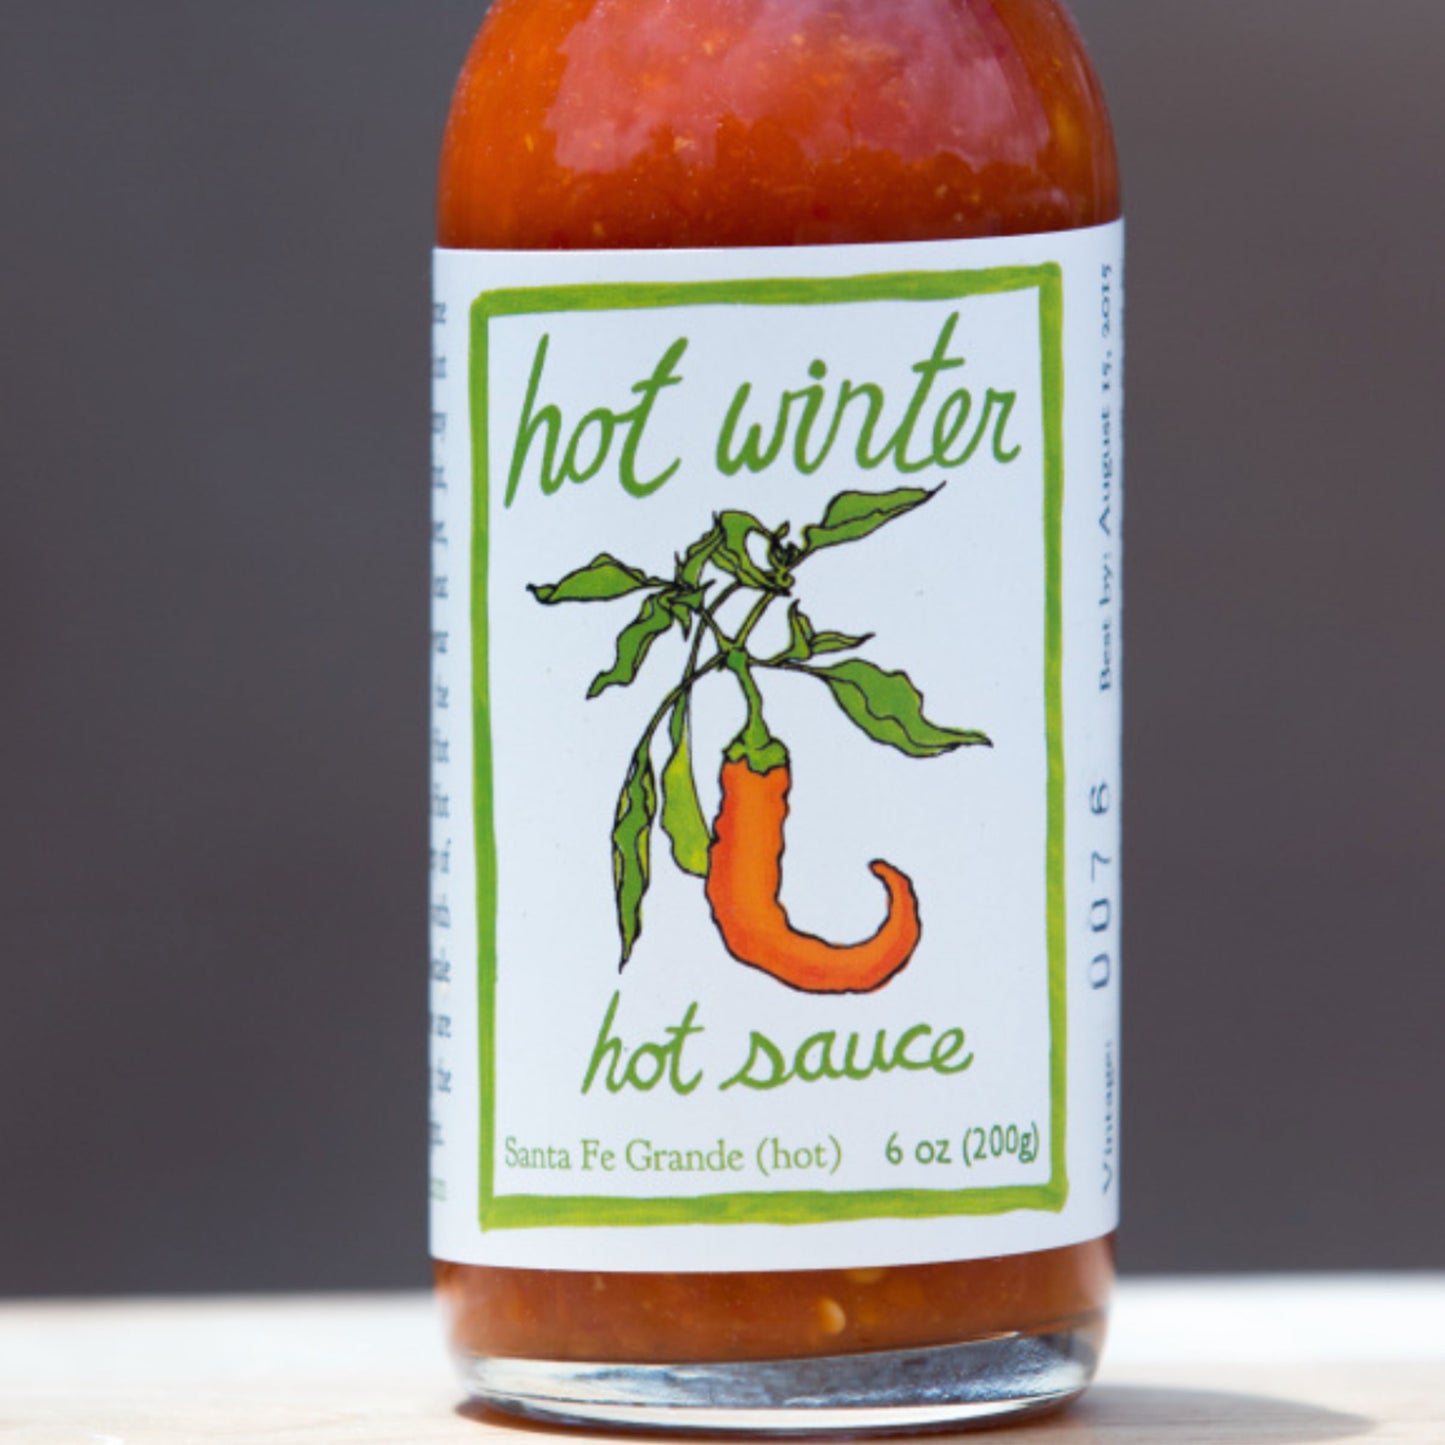 Santa Fe Grande Hot Sauce